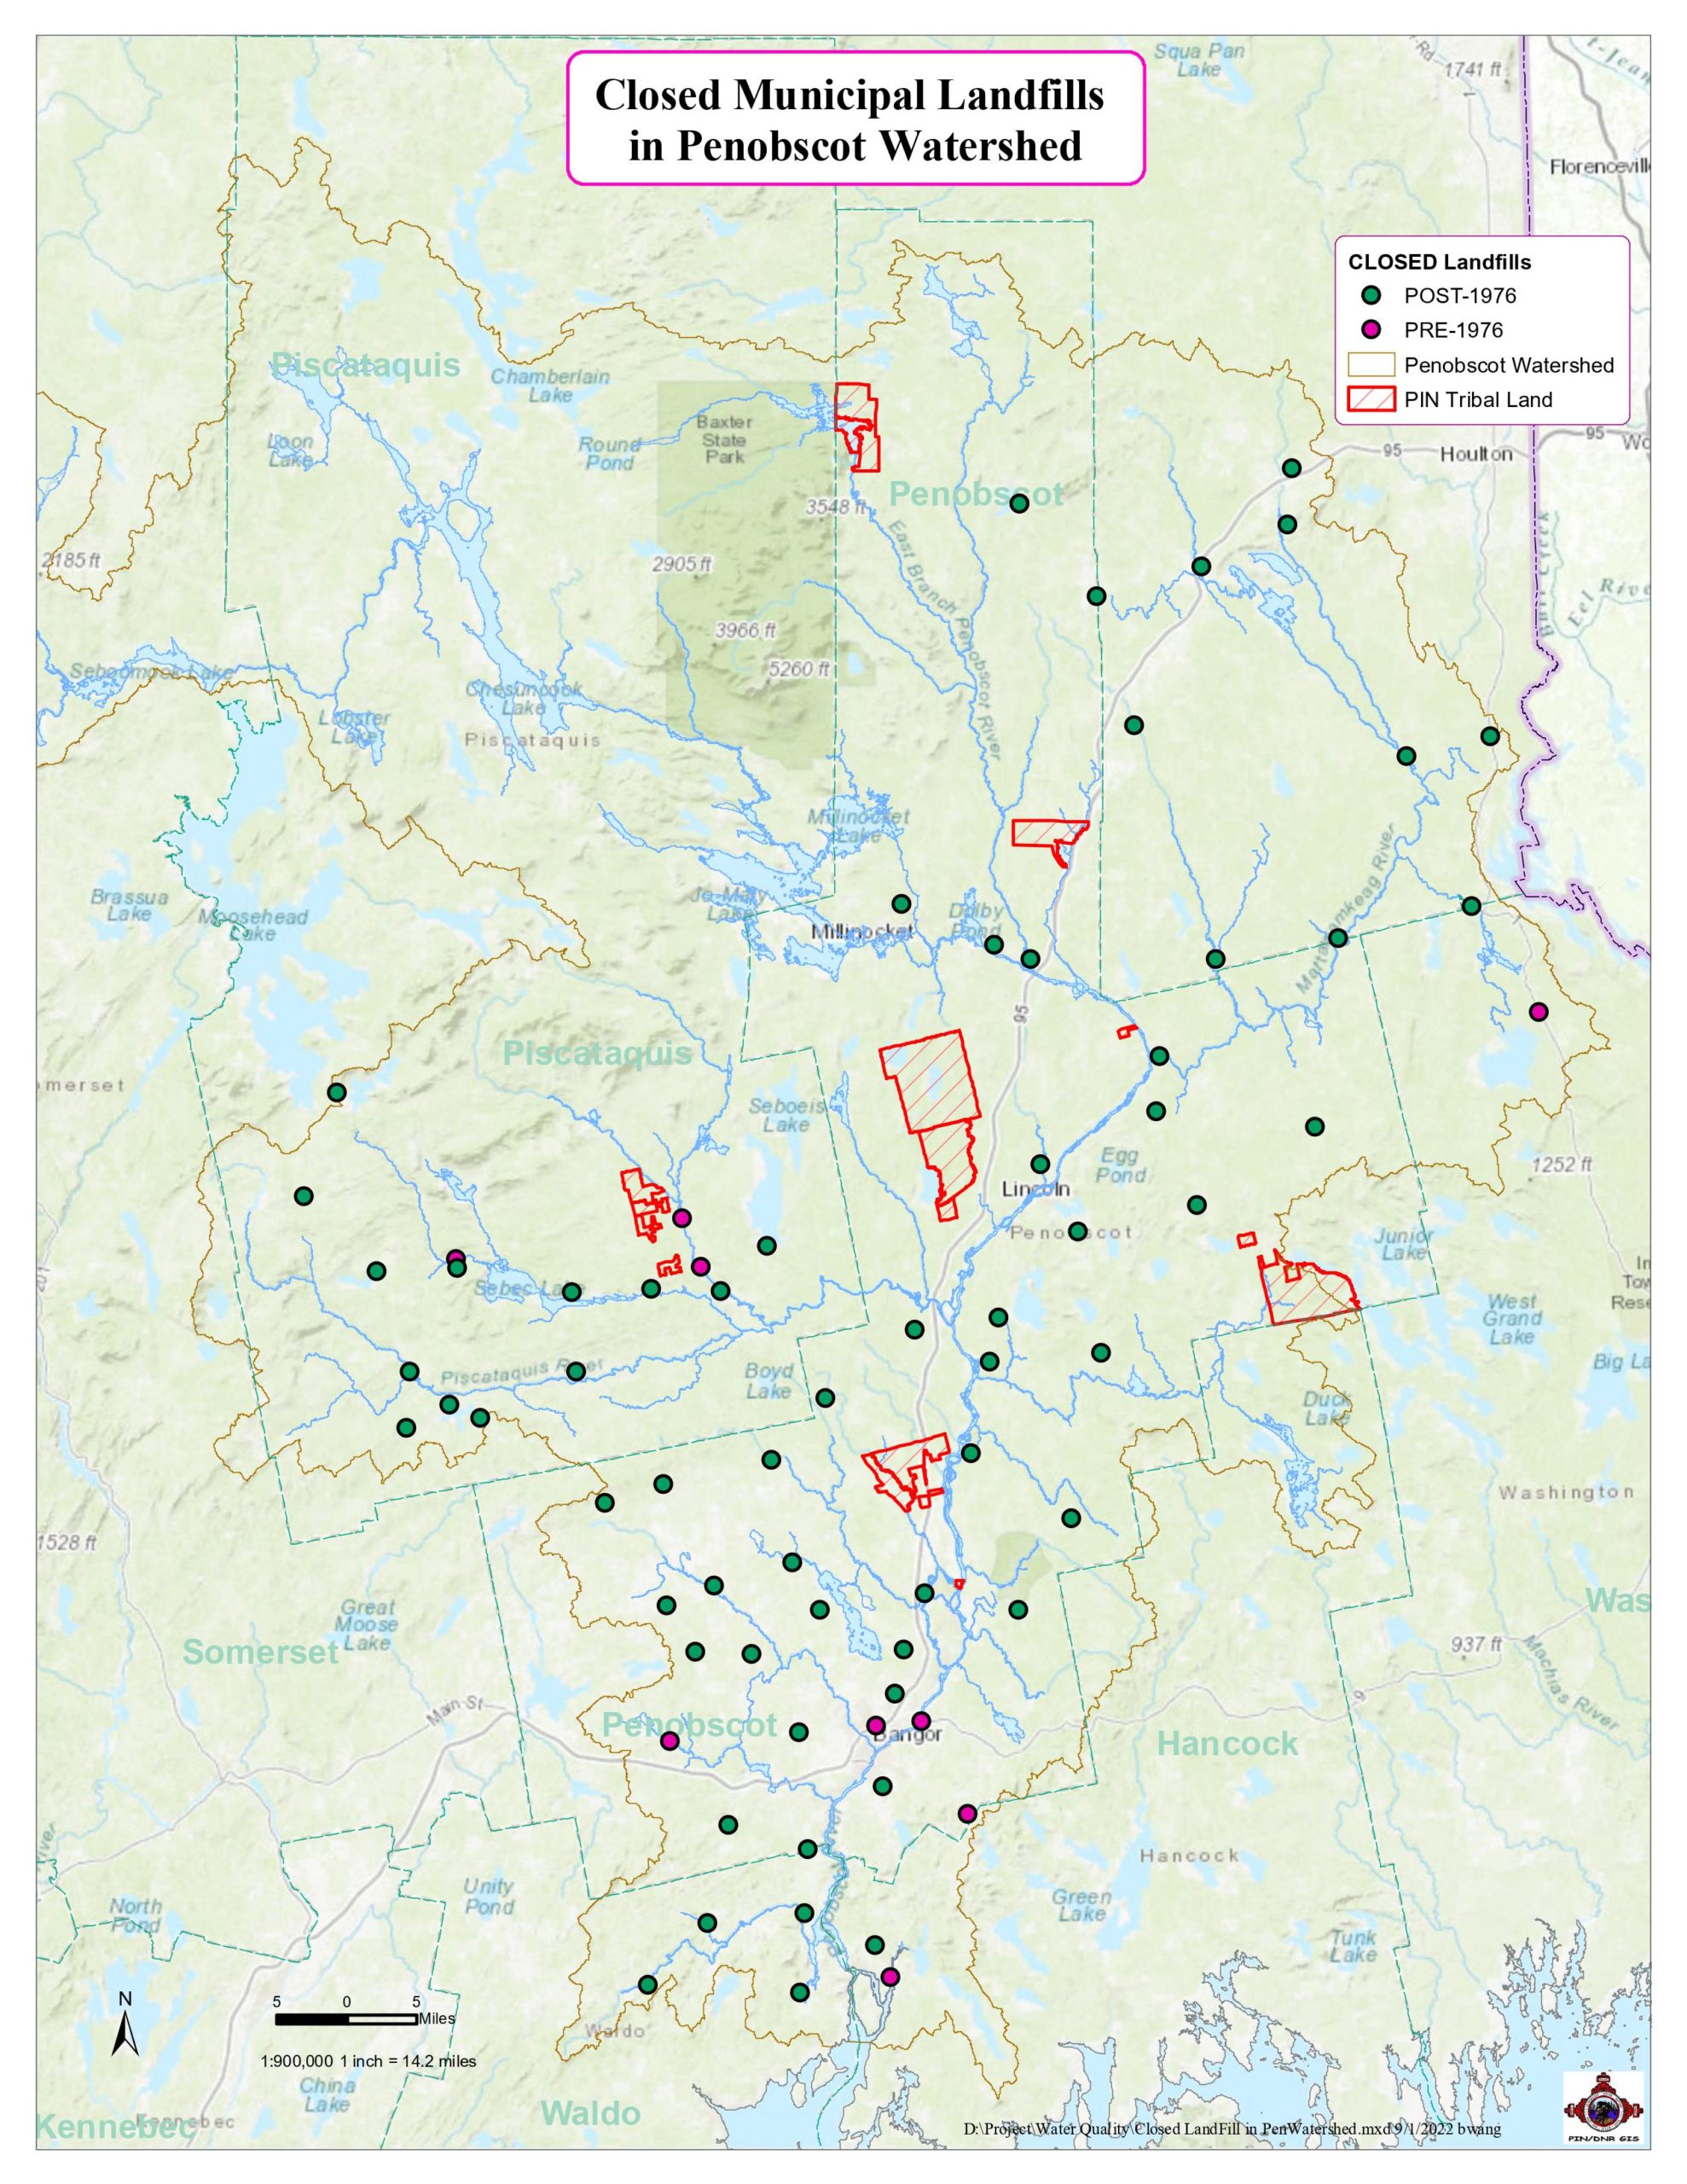 A map of closed municipal landfills around Maine